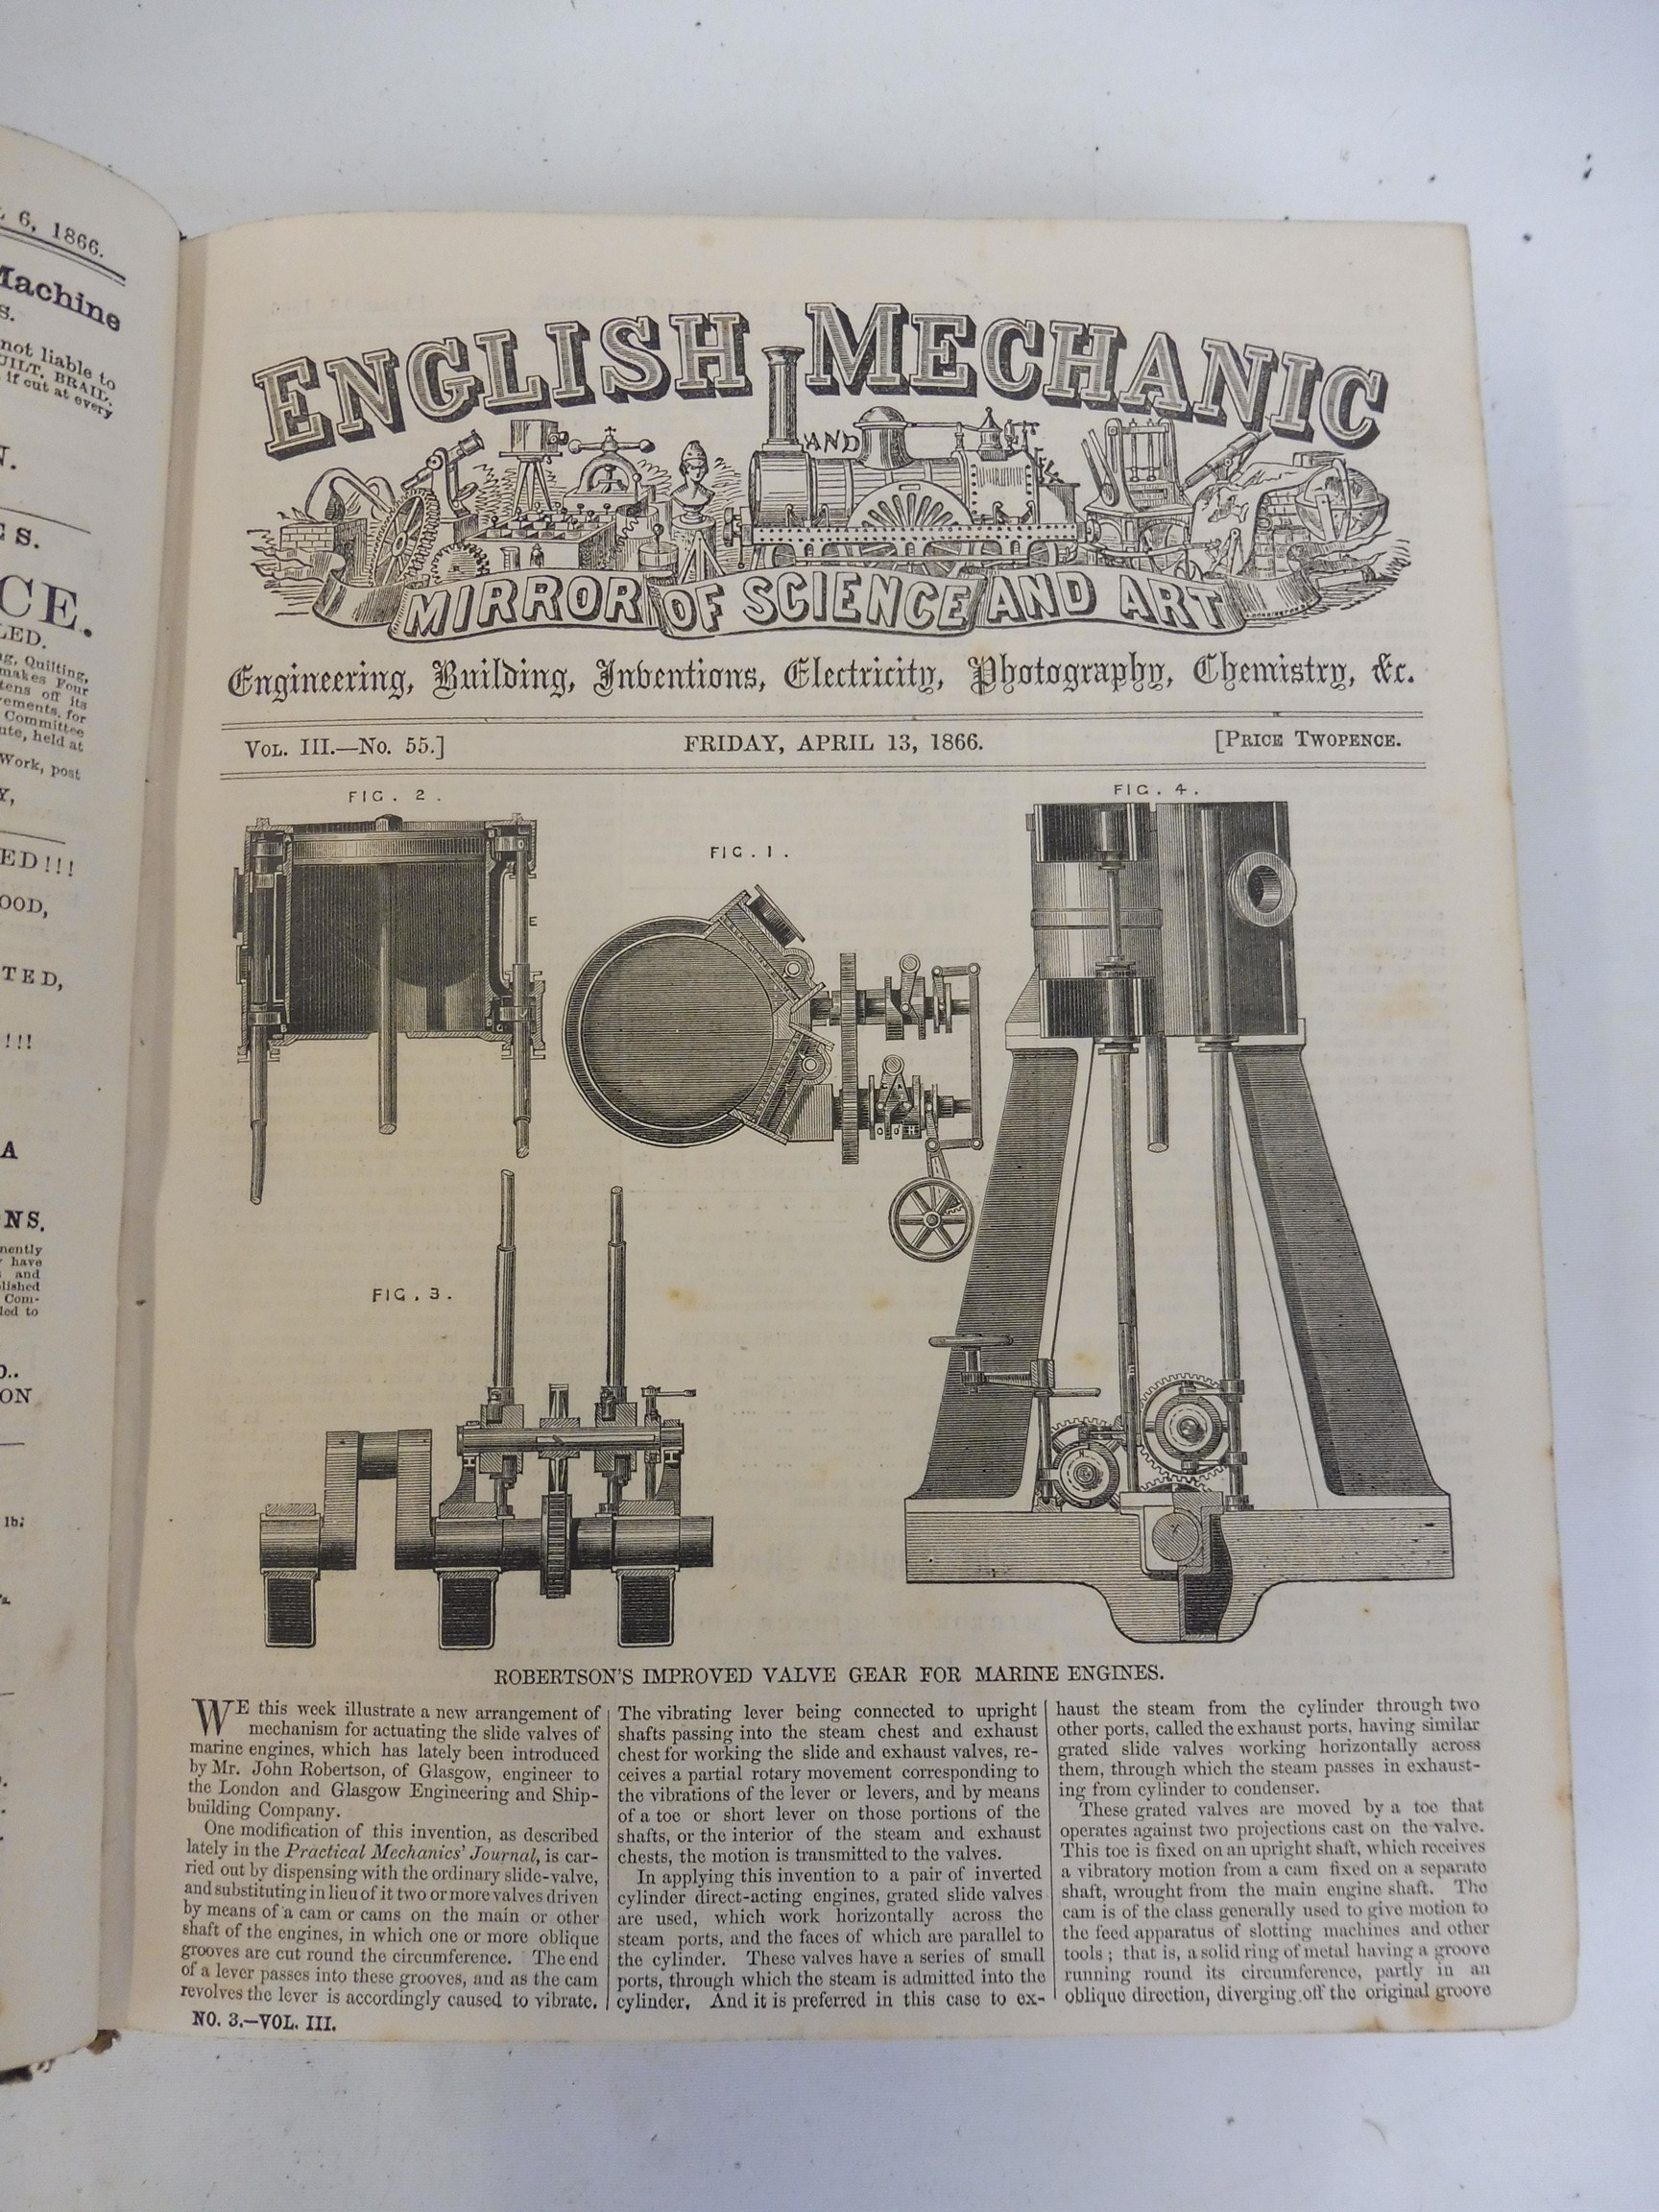 English Mechanic 1866-67, single volume. - Image 3 of 5